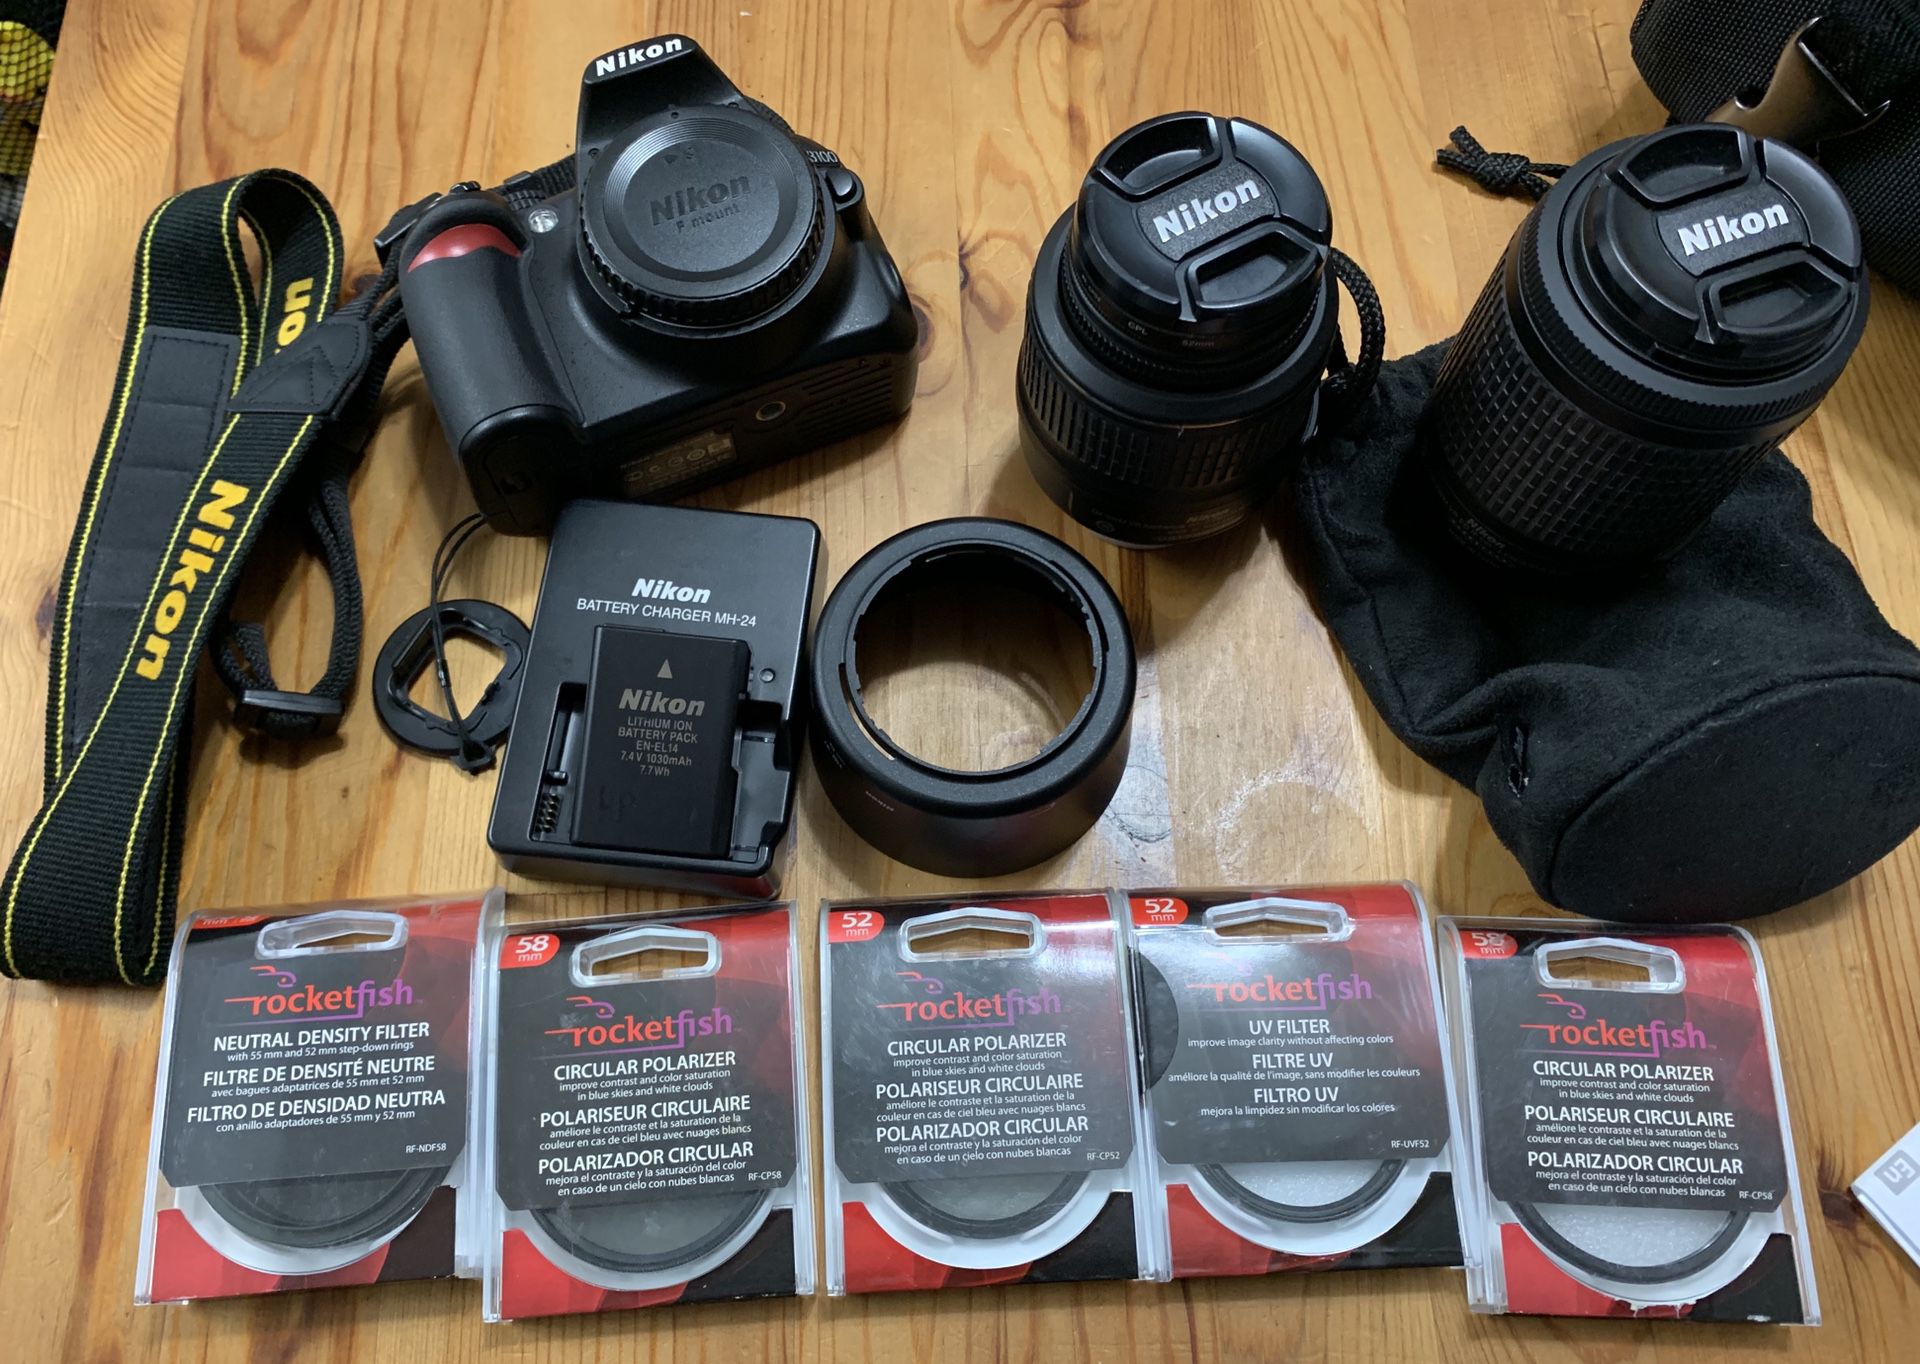 Nikon DSLR D3100 with accessories